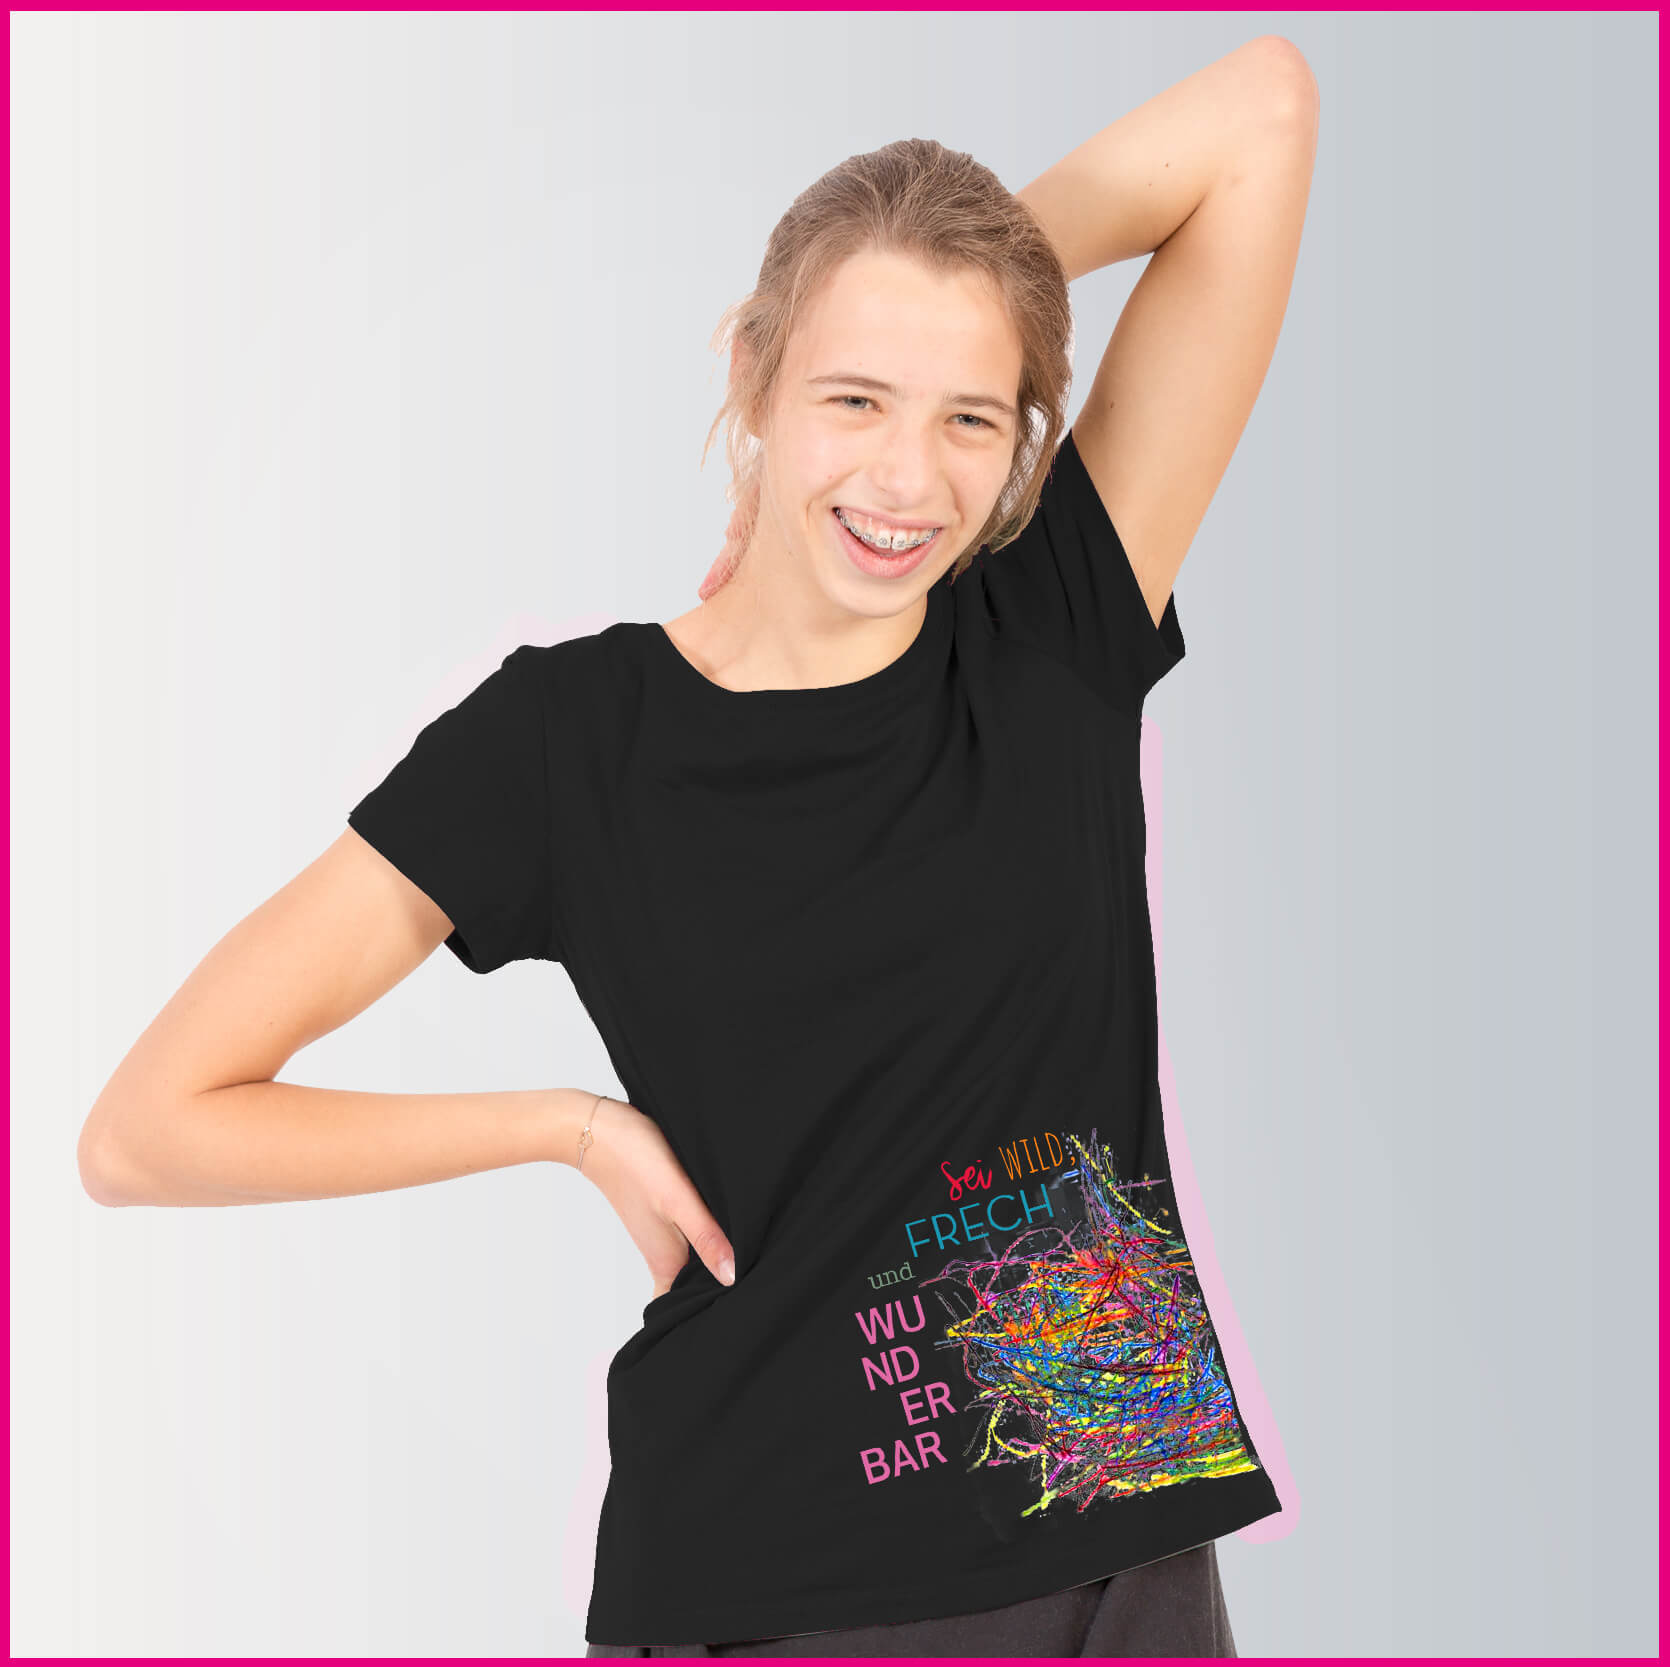 Produktfoto Frauen T-Shirt mit dem Motiv "Farbenfrech" von Michaela Kollarik